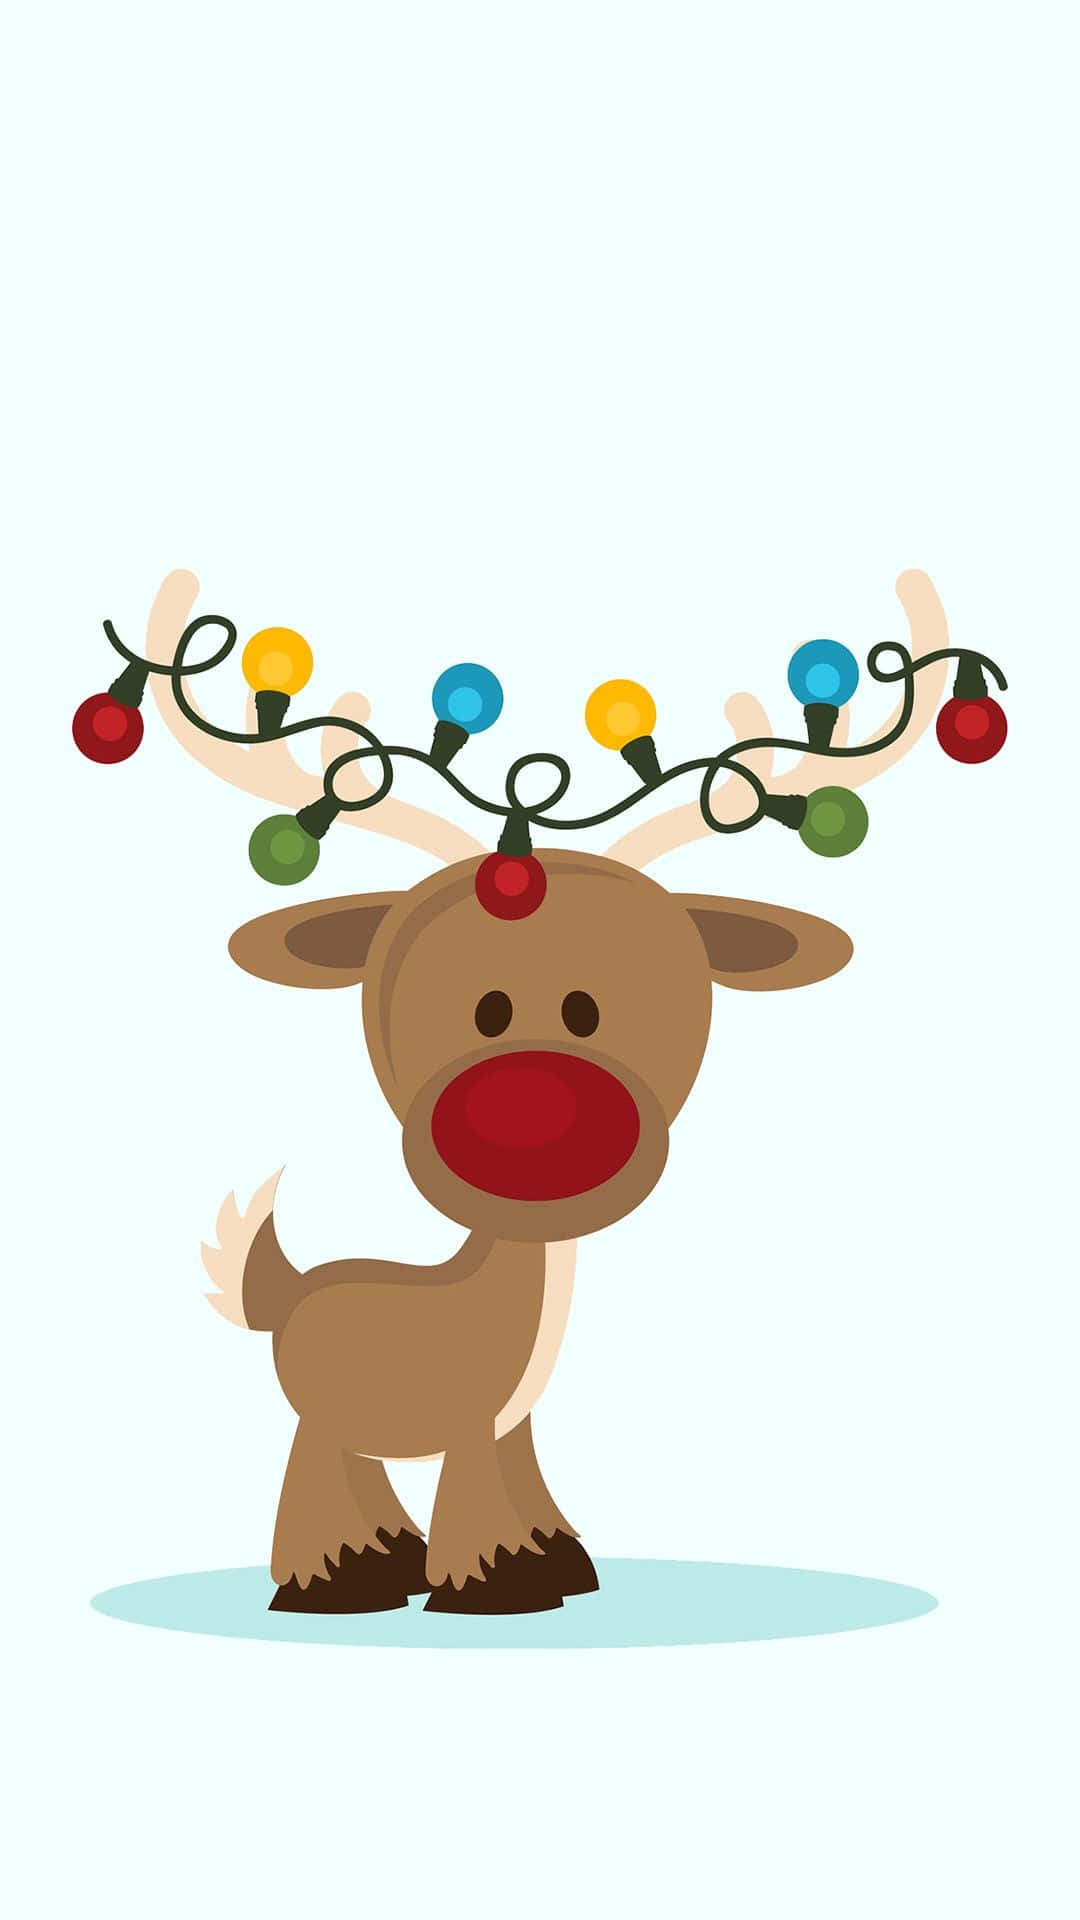 Download Christmas Ornaments Reindeer RoyaltyFree Vector Graphic  Pixabay